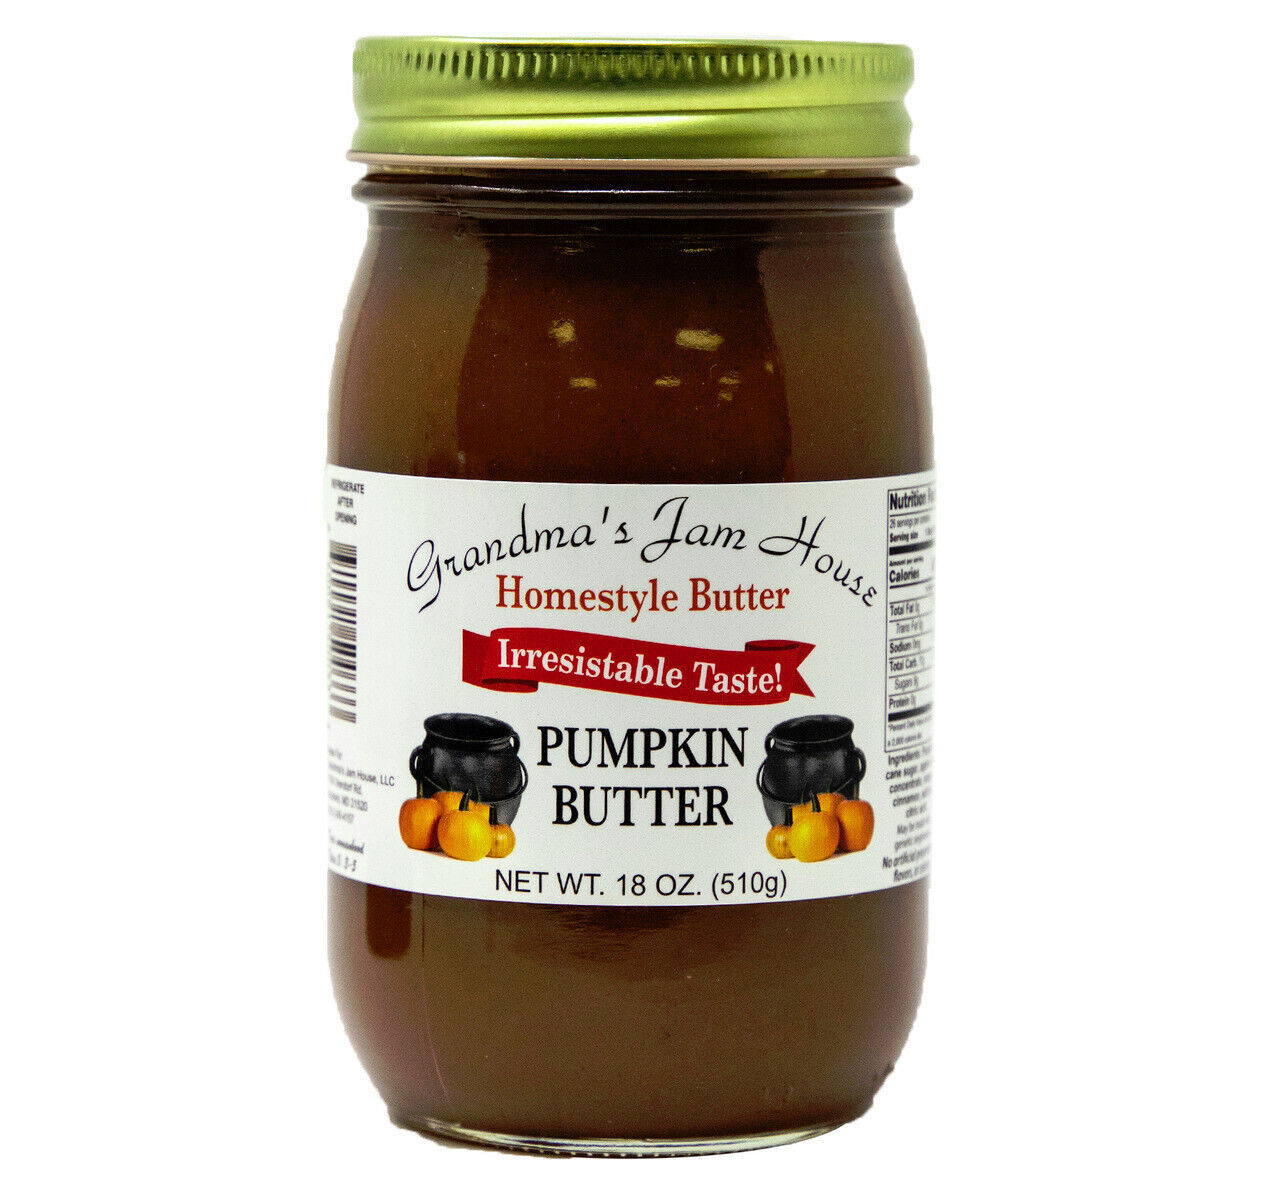 Grandma's Jam House Homestyle Pumpkin Butter, 2-Pack 18 oz. Jars - $33.61